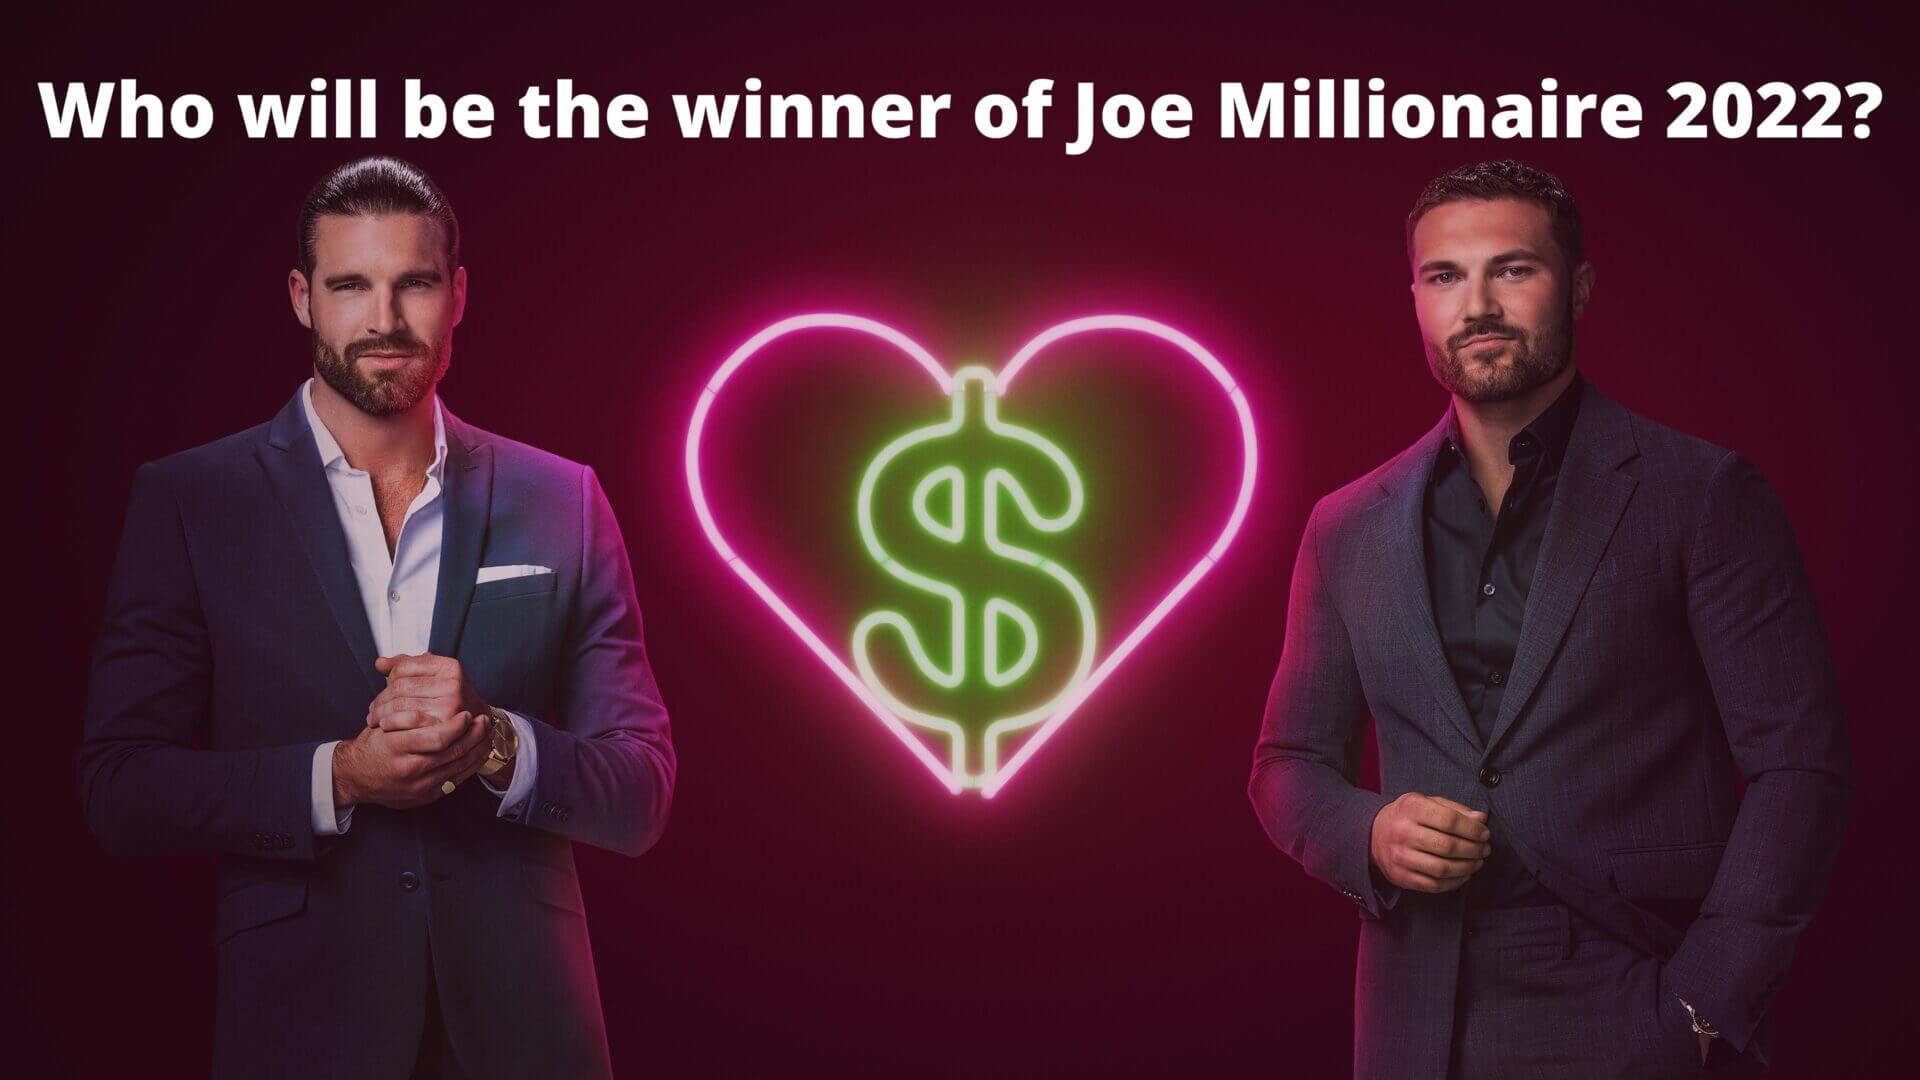 Who will be the winner of Joe Millionaire 2022? - Joe Millionaire 2022 ... Did Season 4 Contestants